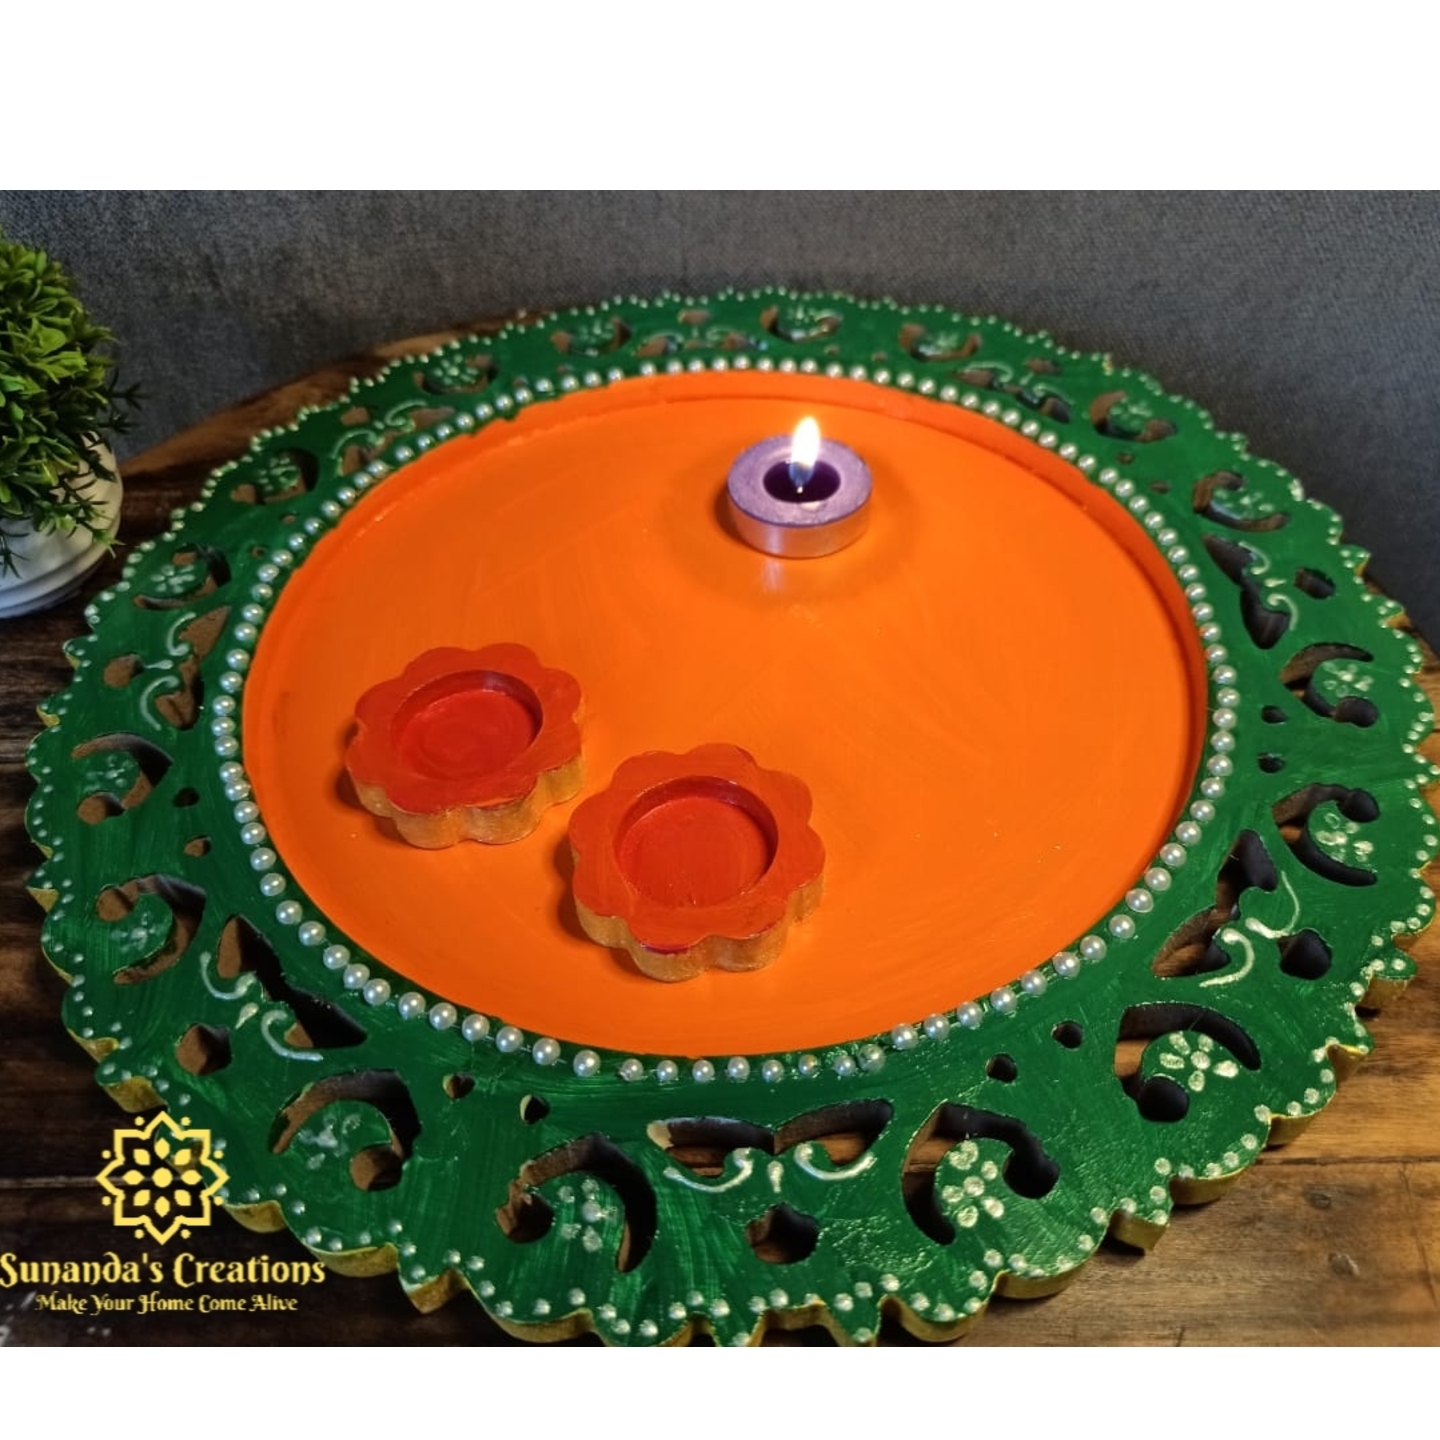 Decorative Puja ThaliHand PaintedKolka Design 2 Small bowls